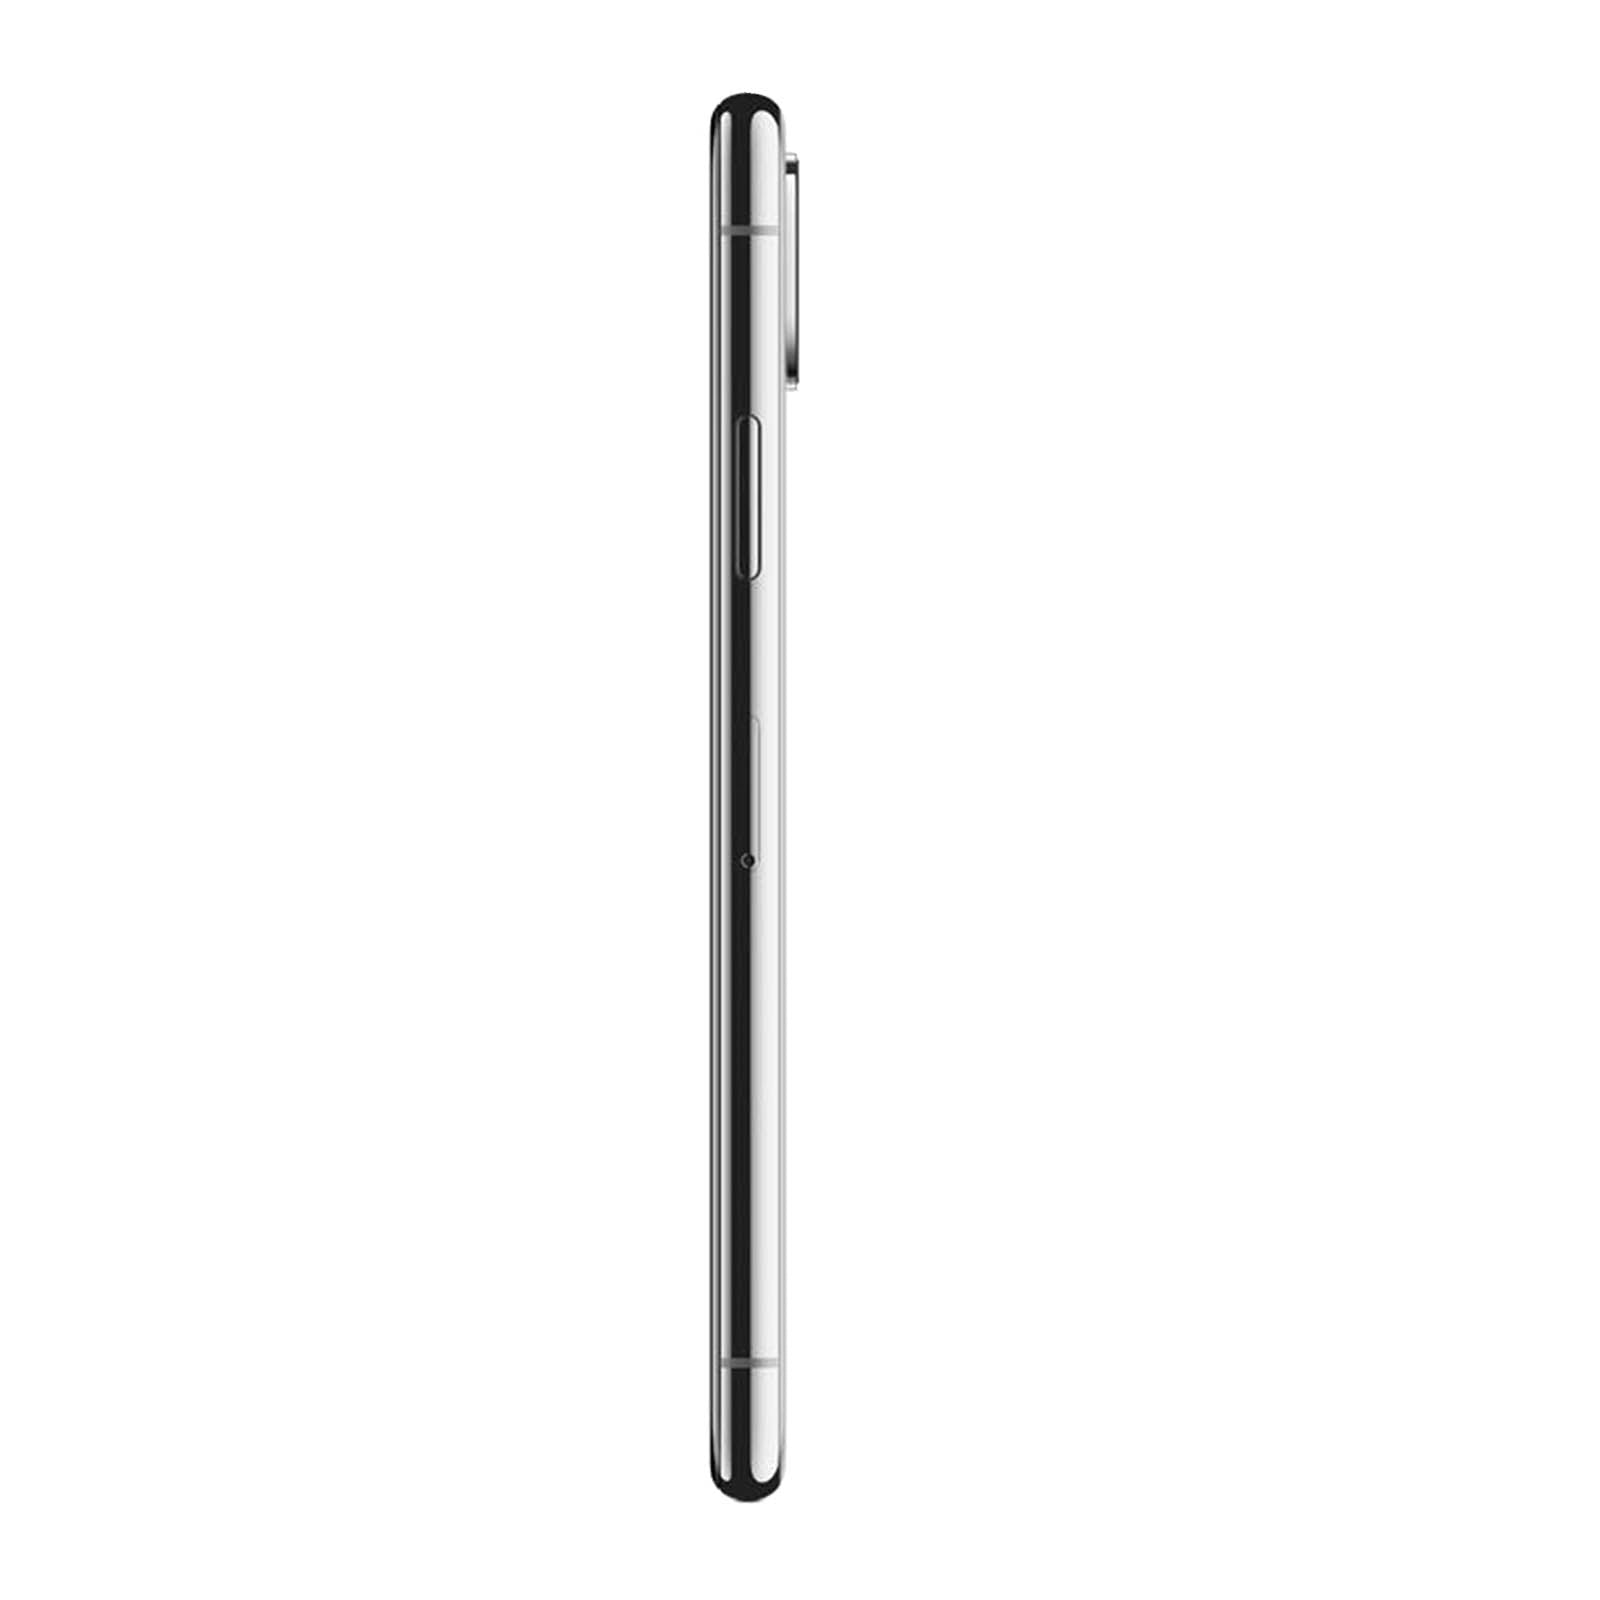 Apple iPhone XS Max 512GB Space Grey Pristine - T-Mobile